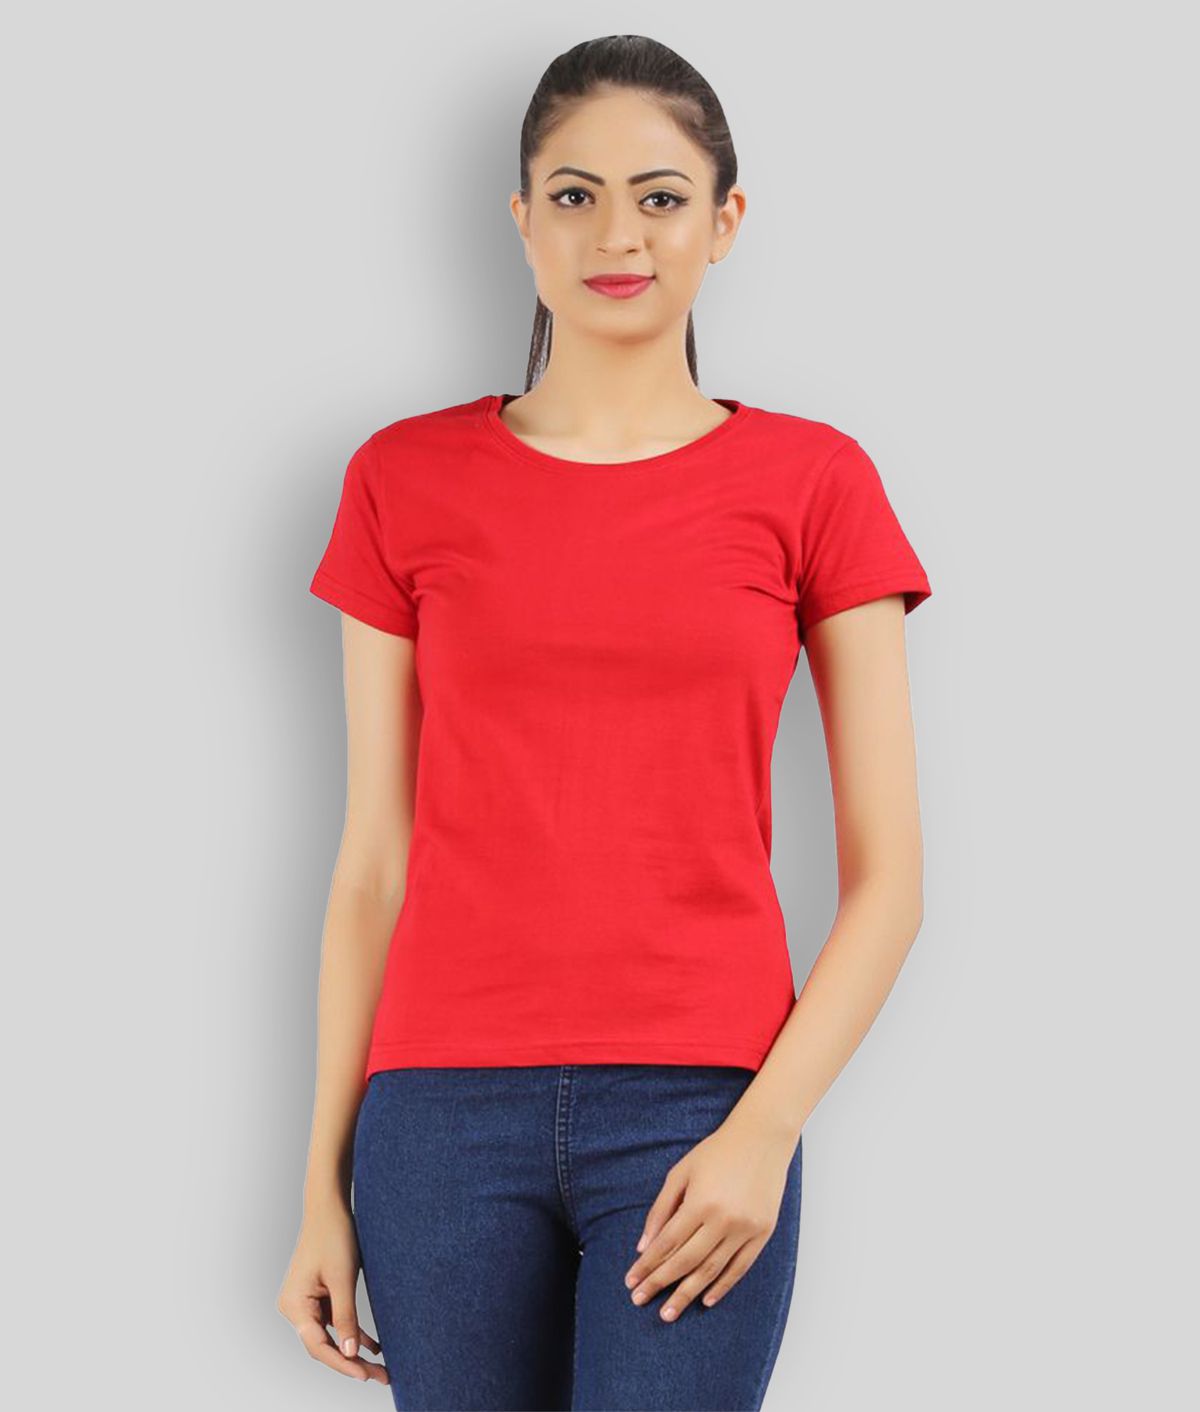     			Ap'pulse - Red Cotton Regular Fit Women's T-Shirt ( Pack of 1 )